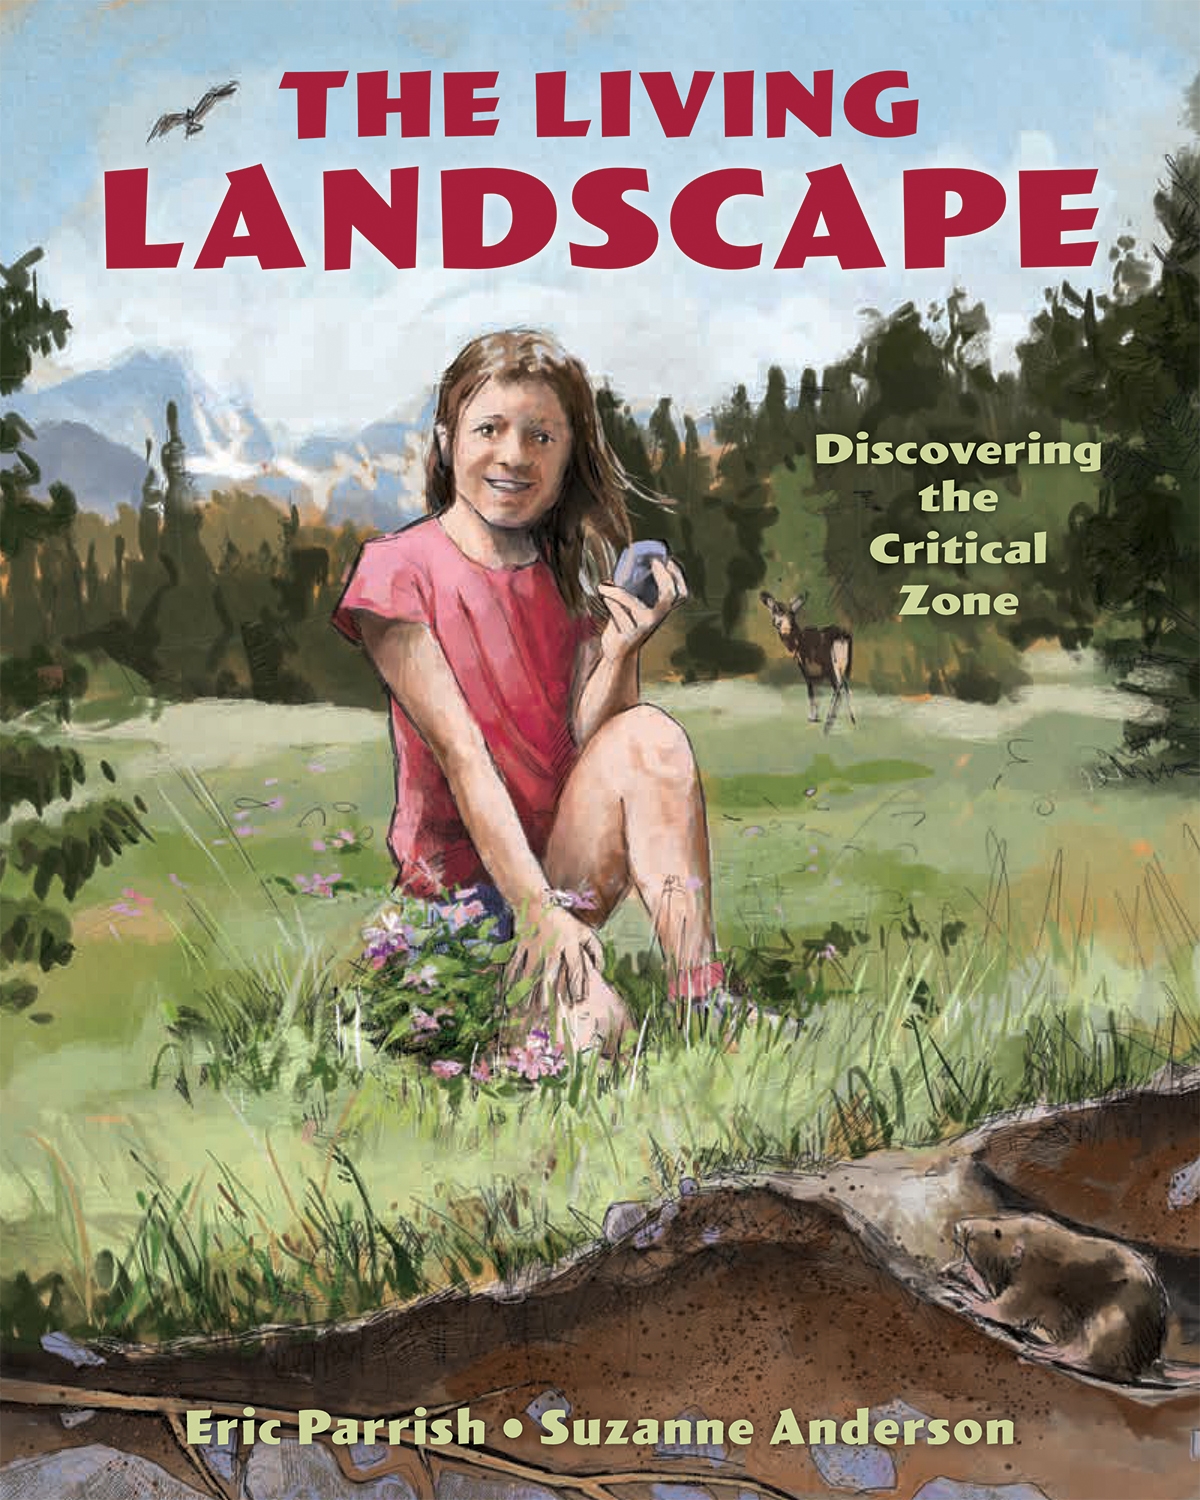 Children’s book about our living landscape!